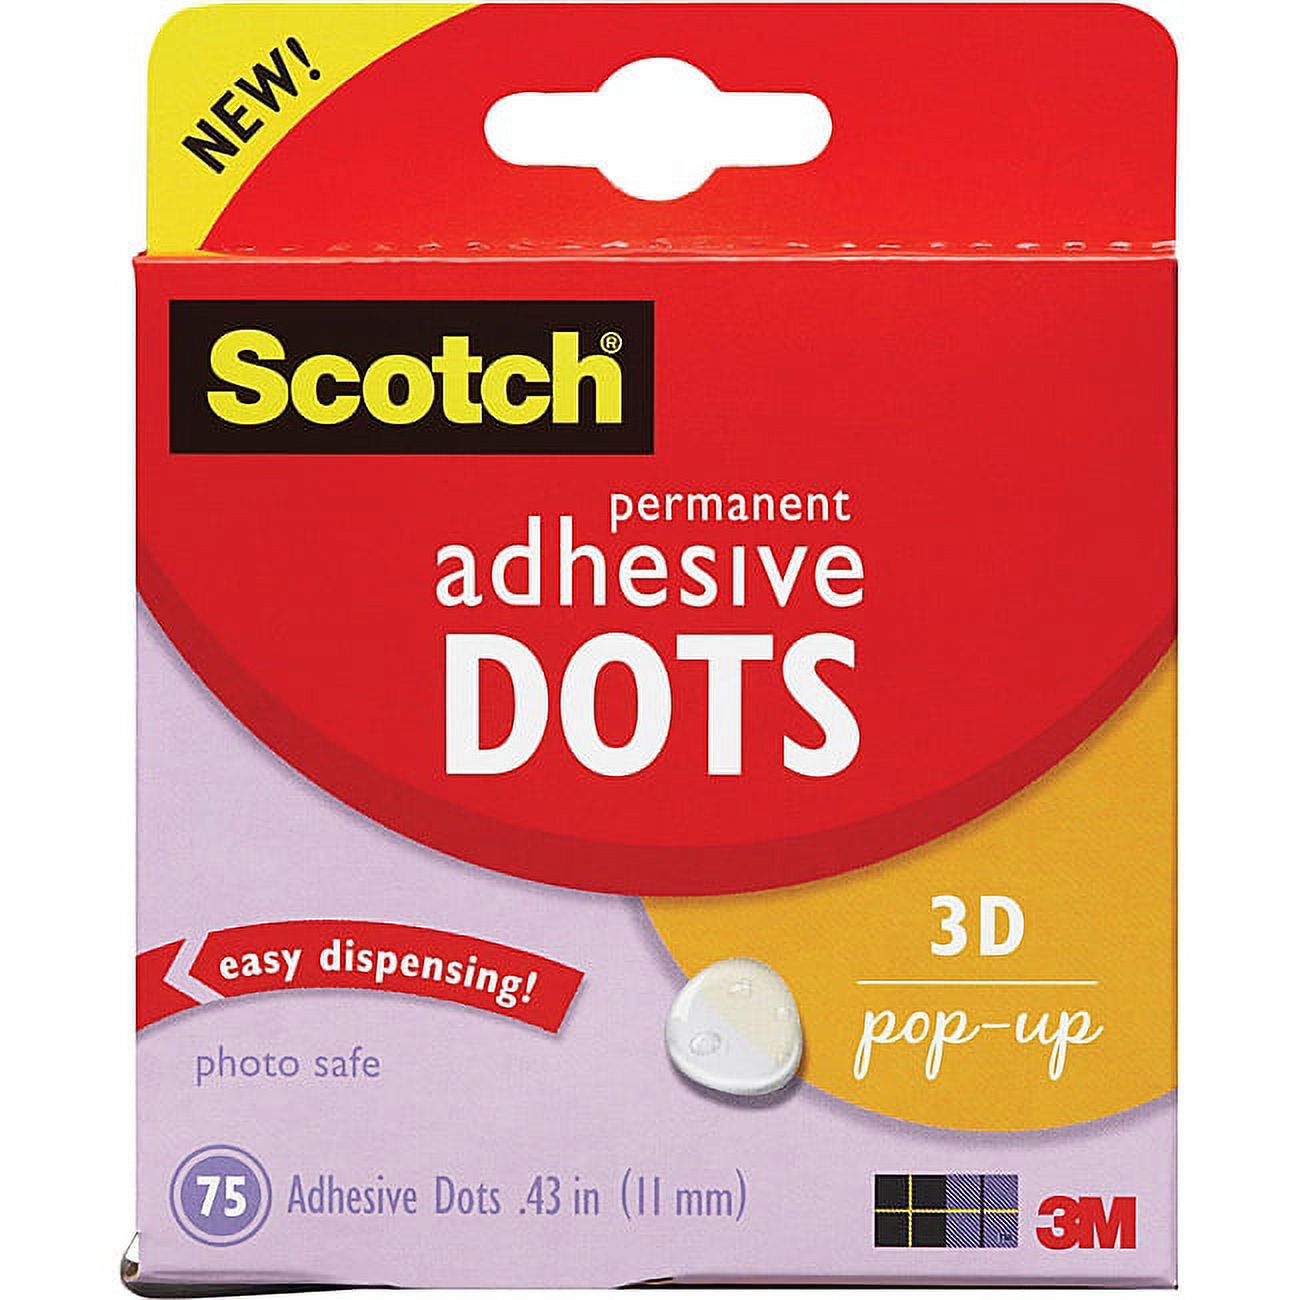 Scotch Permanent Adhesive Dots-3D Pop-Up .43" 75/Pkg - image 3 of 3